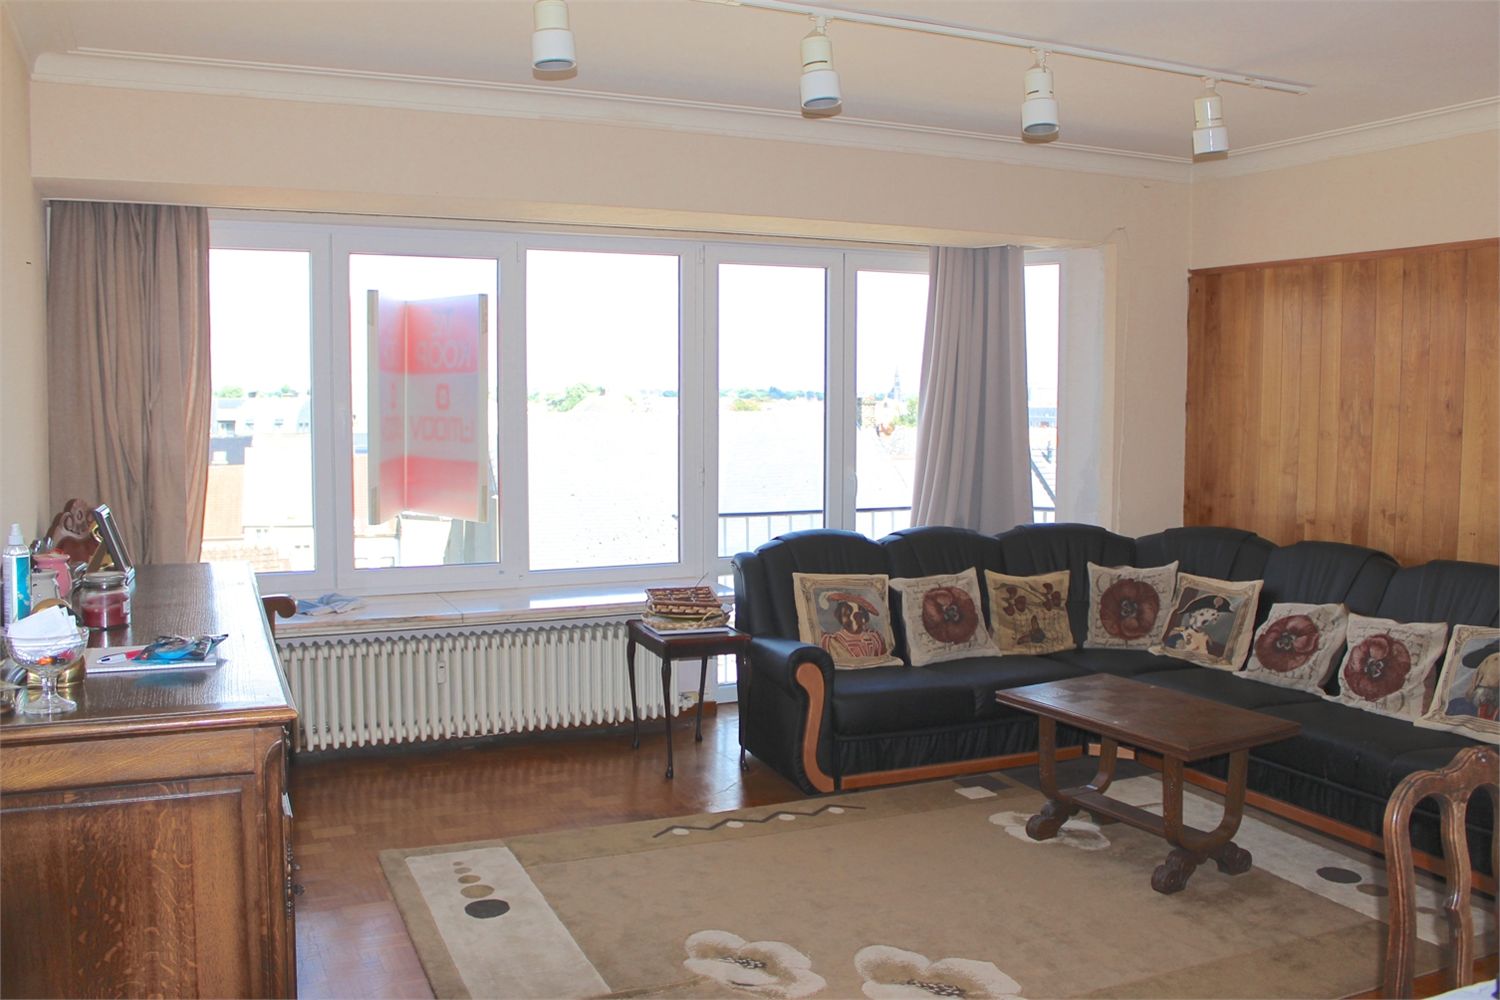 Appartement verkocht in Ledeberg